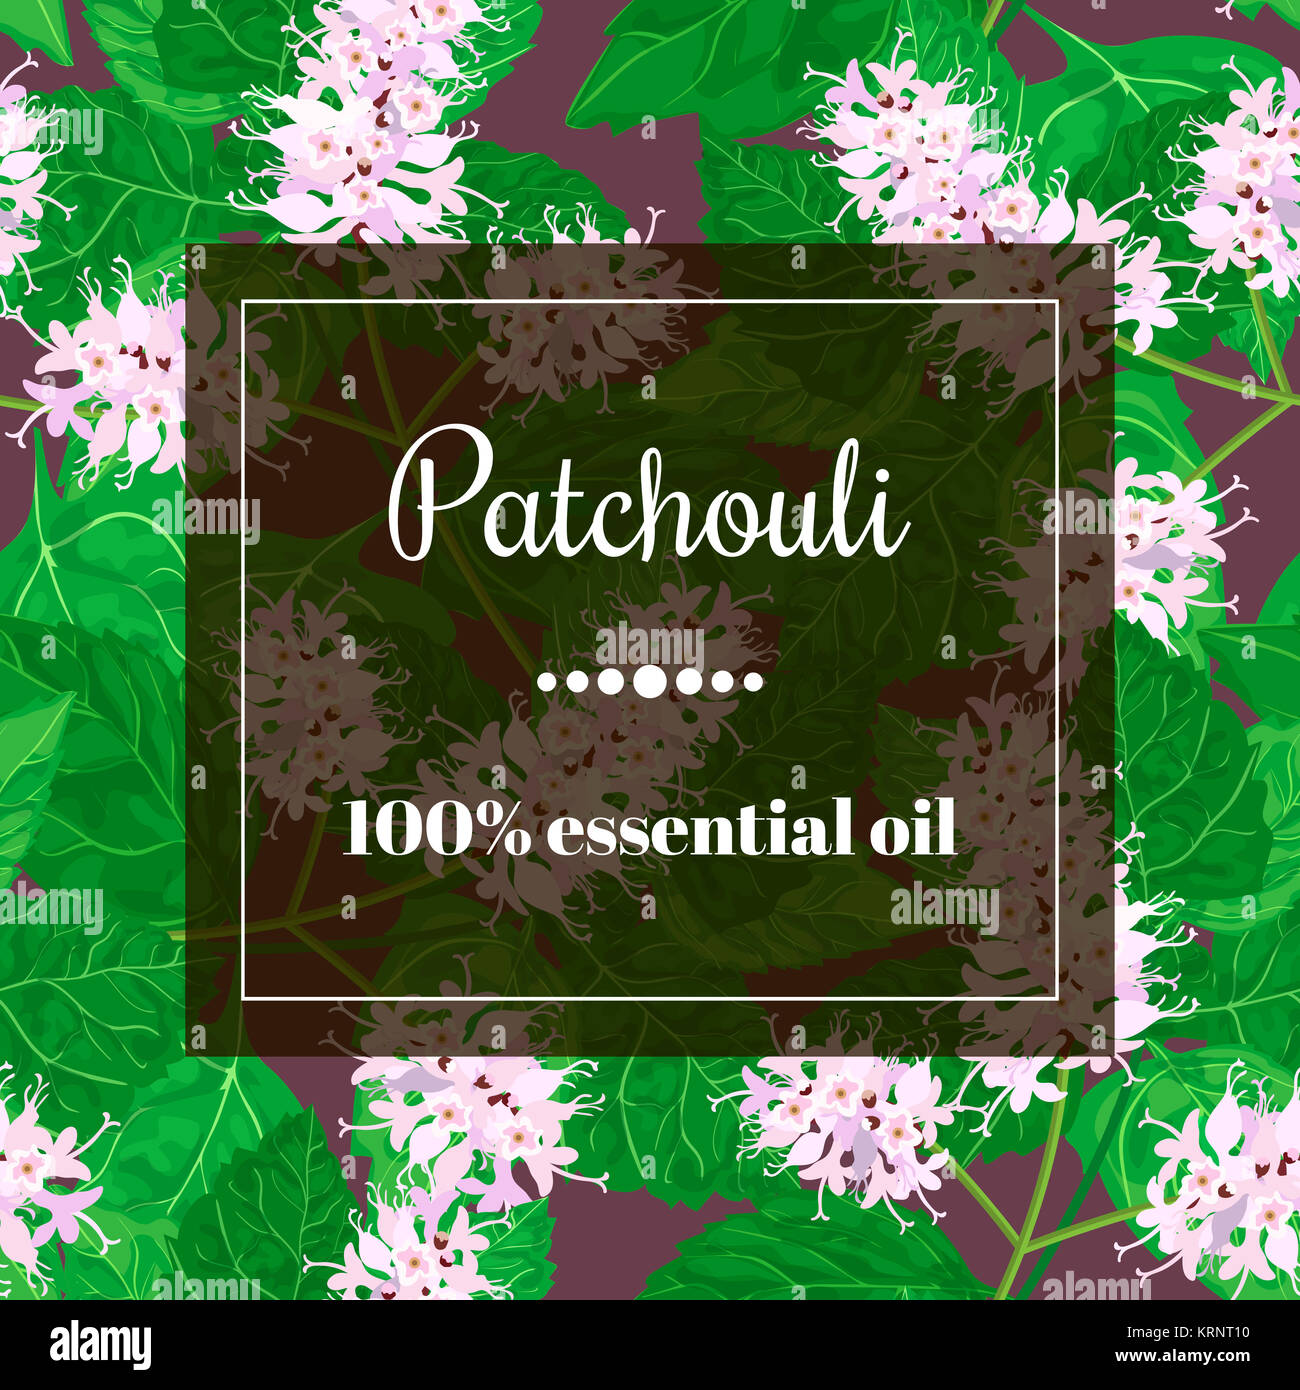 patchouli essential oil Stock Photo